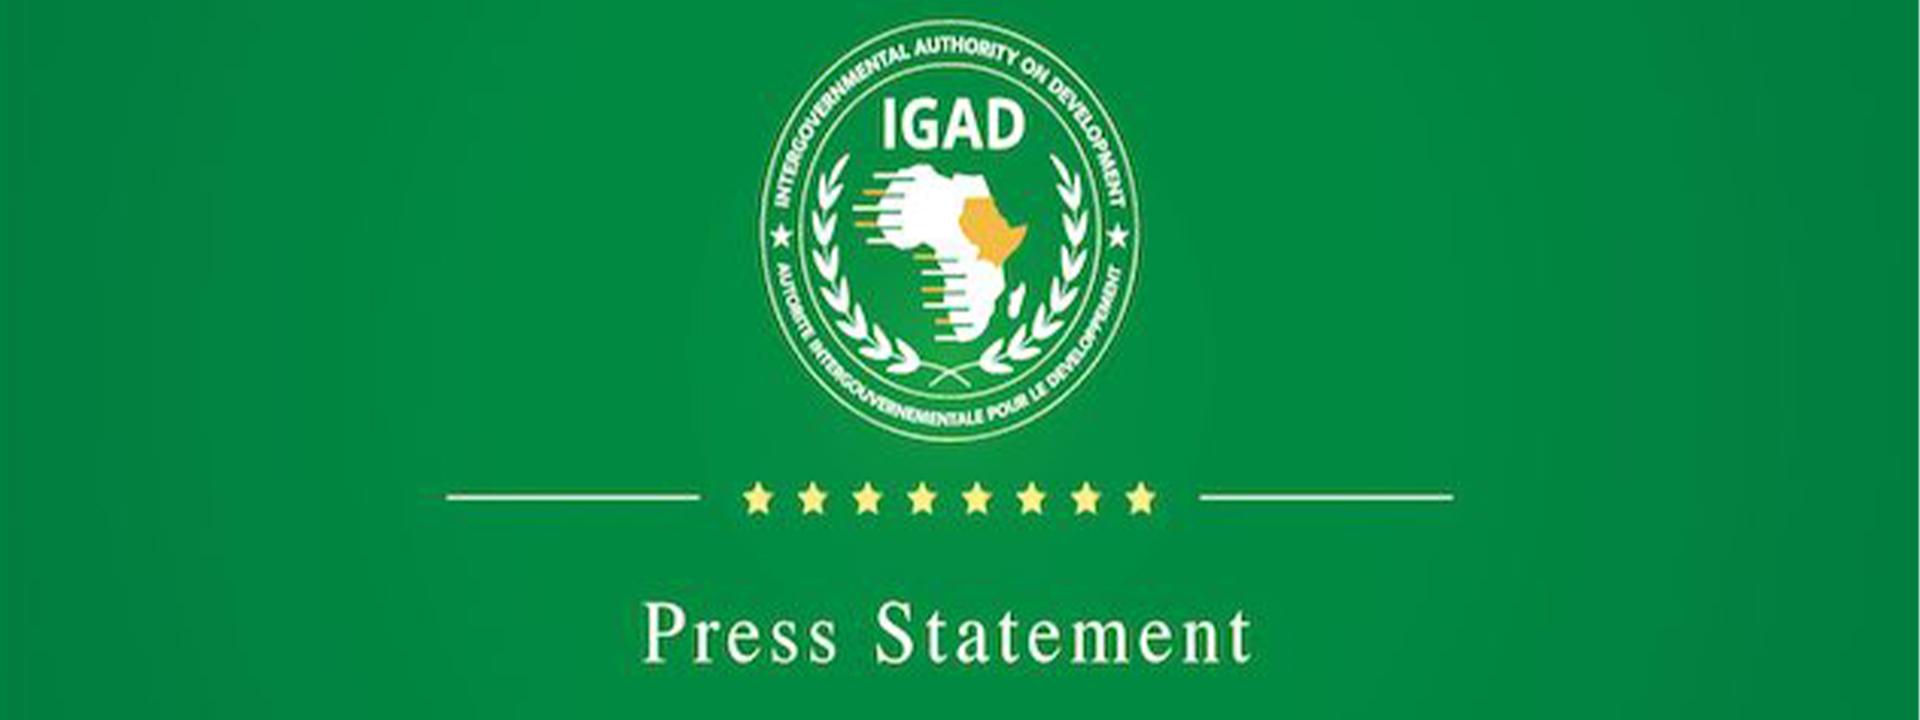 Statement of the IGAD Executive Secretary on the Sudan Ceasefire Talks in Jeddah, Kingdom of Saudi Arabia